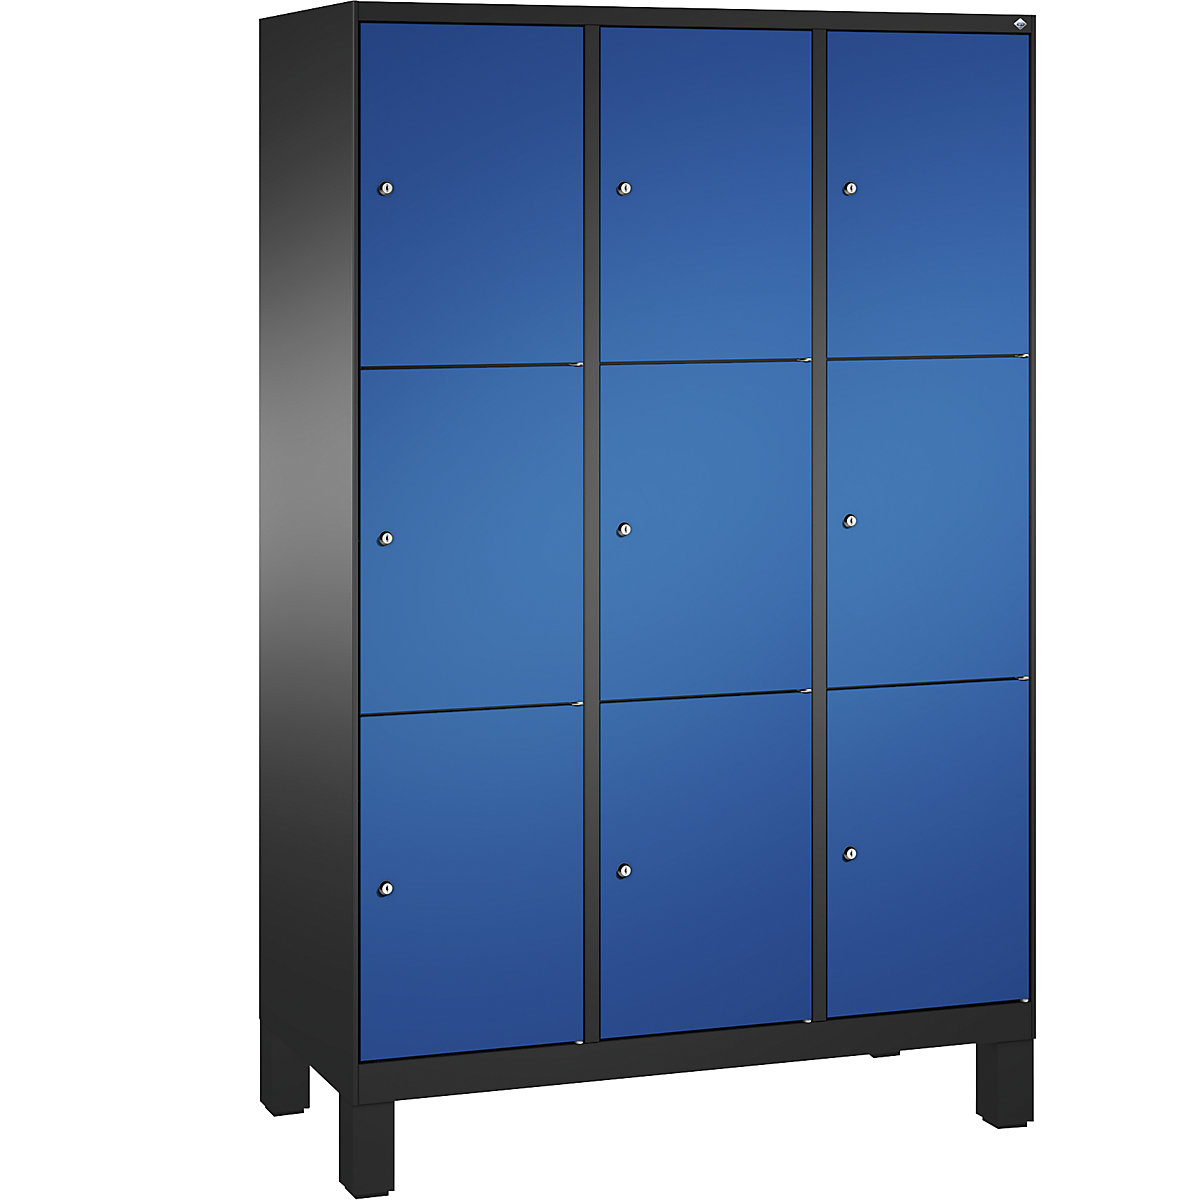 EVOLO locker unit, with feet – C+P, 3 compartments, 3 shelf compartments each, compartment width 400 mm, black grey / gentian blue-9